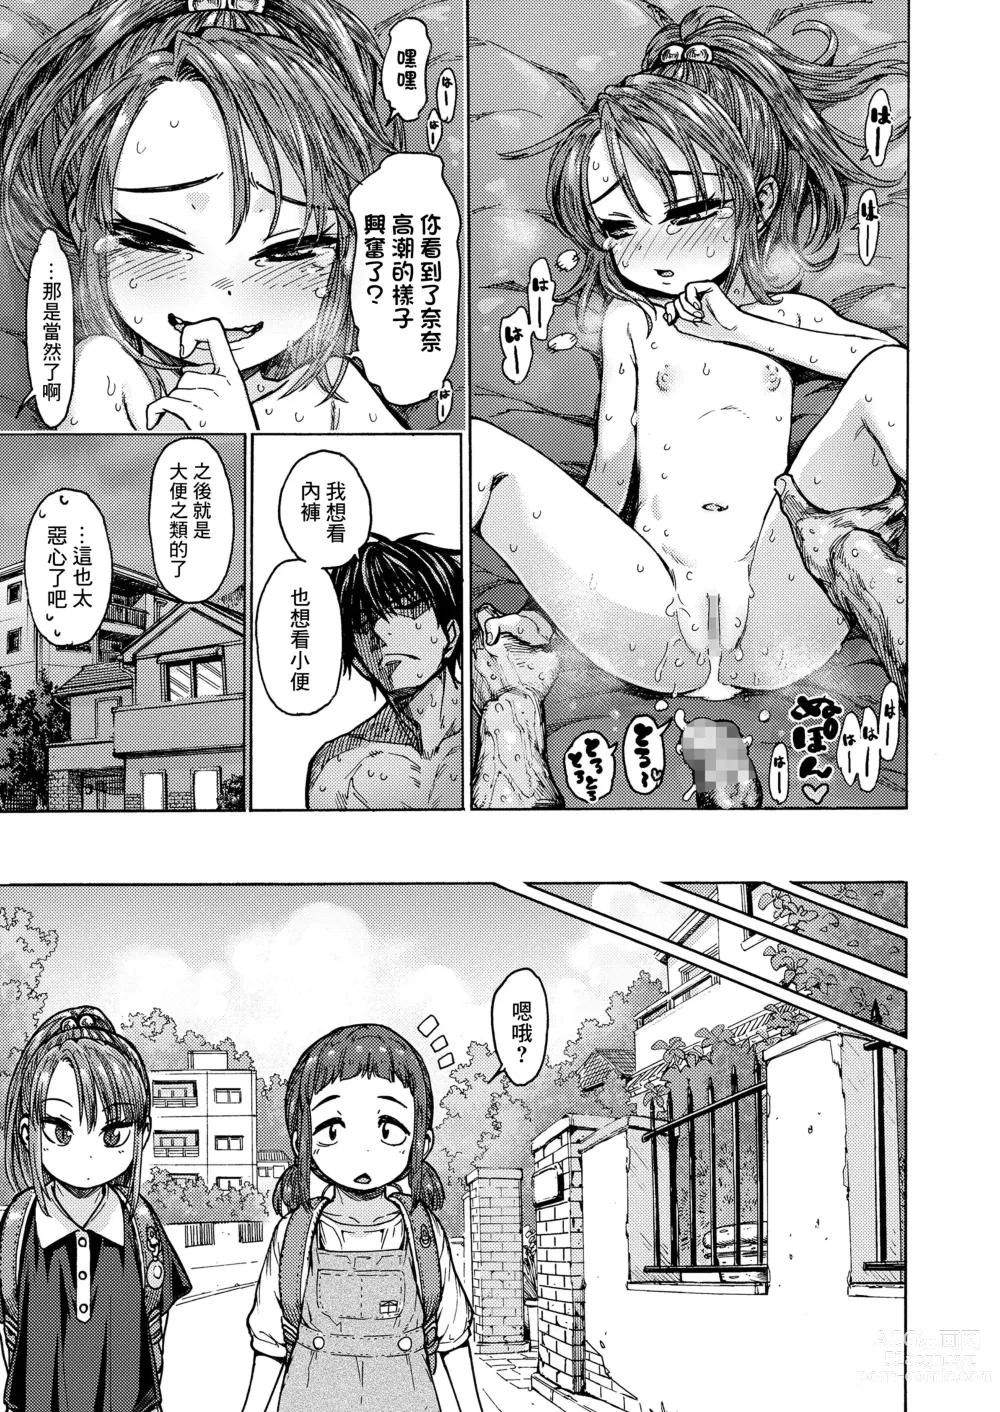 Page 23 of manga Kyou no Pantsu!